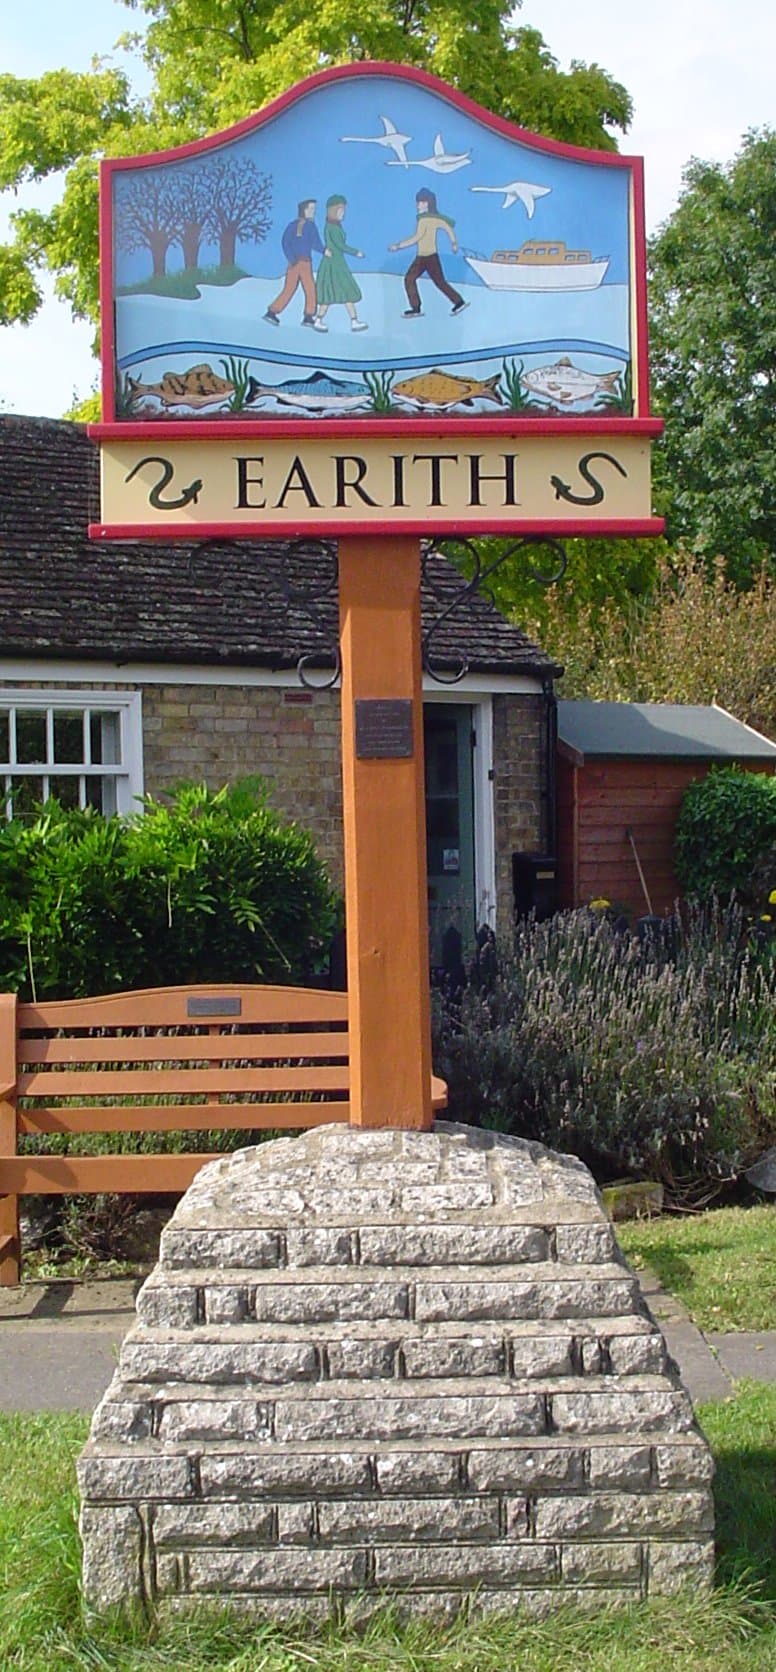 Earith Cambridgeshire